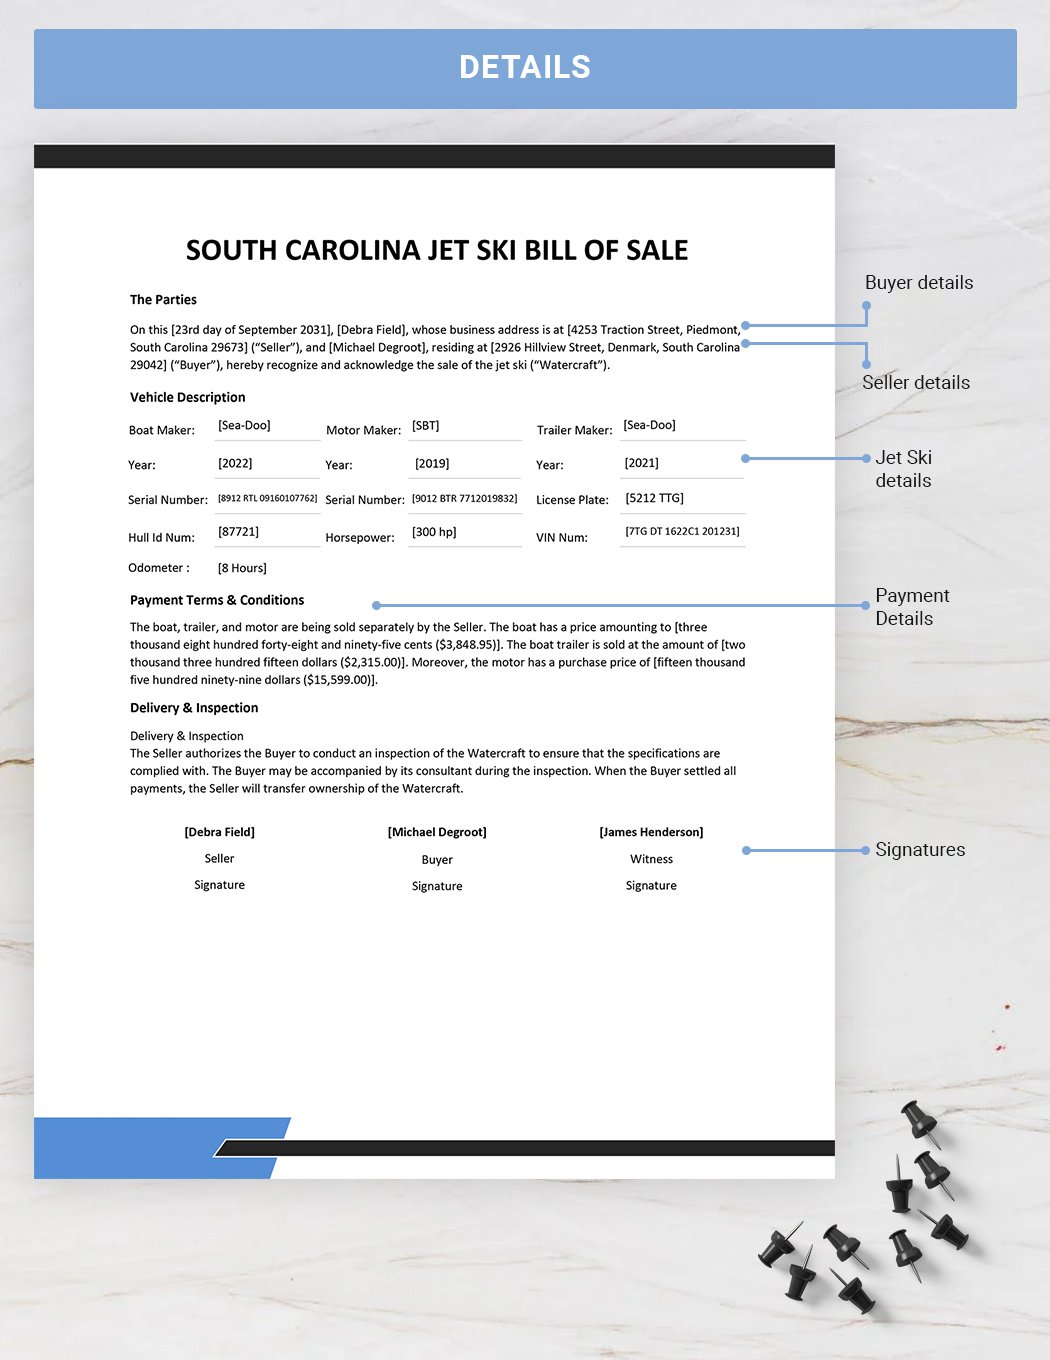 South Carolina Jet Ski Bill Of Sale Form Template